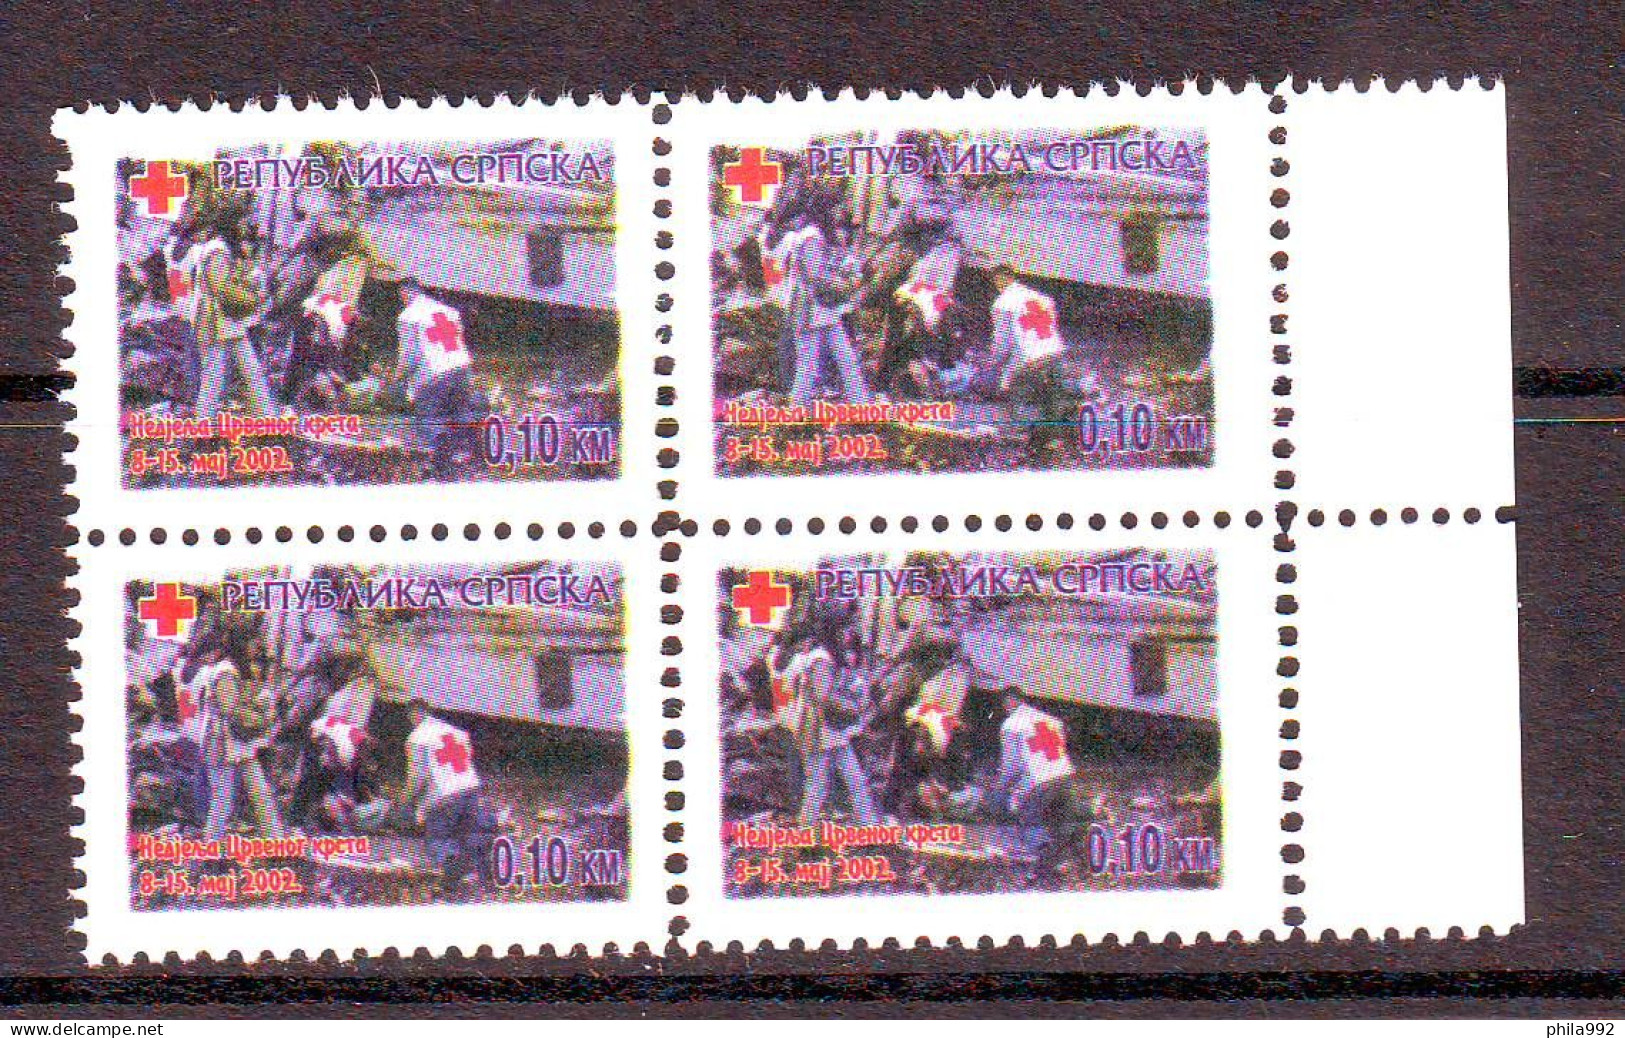 Bosnia:Republika Srpska 2002  Charity Stamp Red Cross  Mi.No.10 Self Adhesive Block Of 4 MNH - Bosnia And Herzegovina